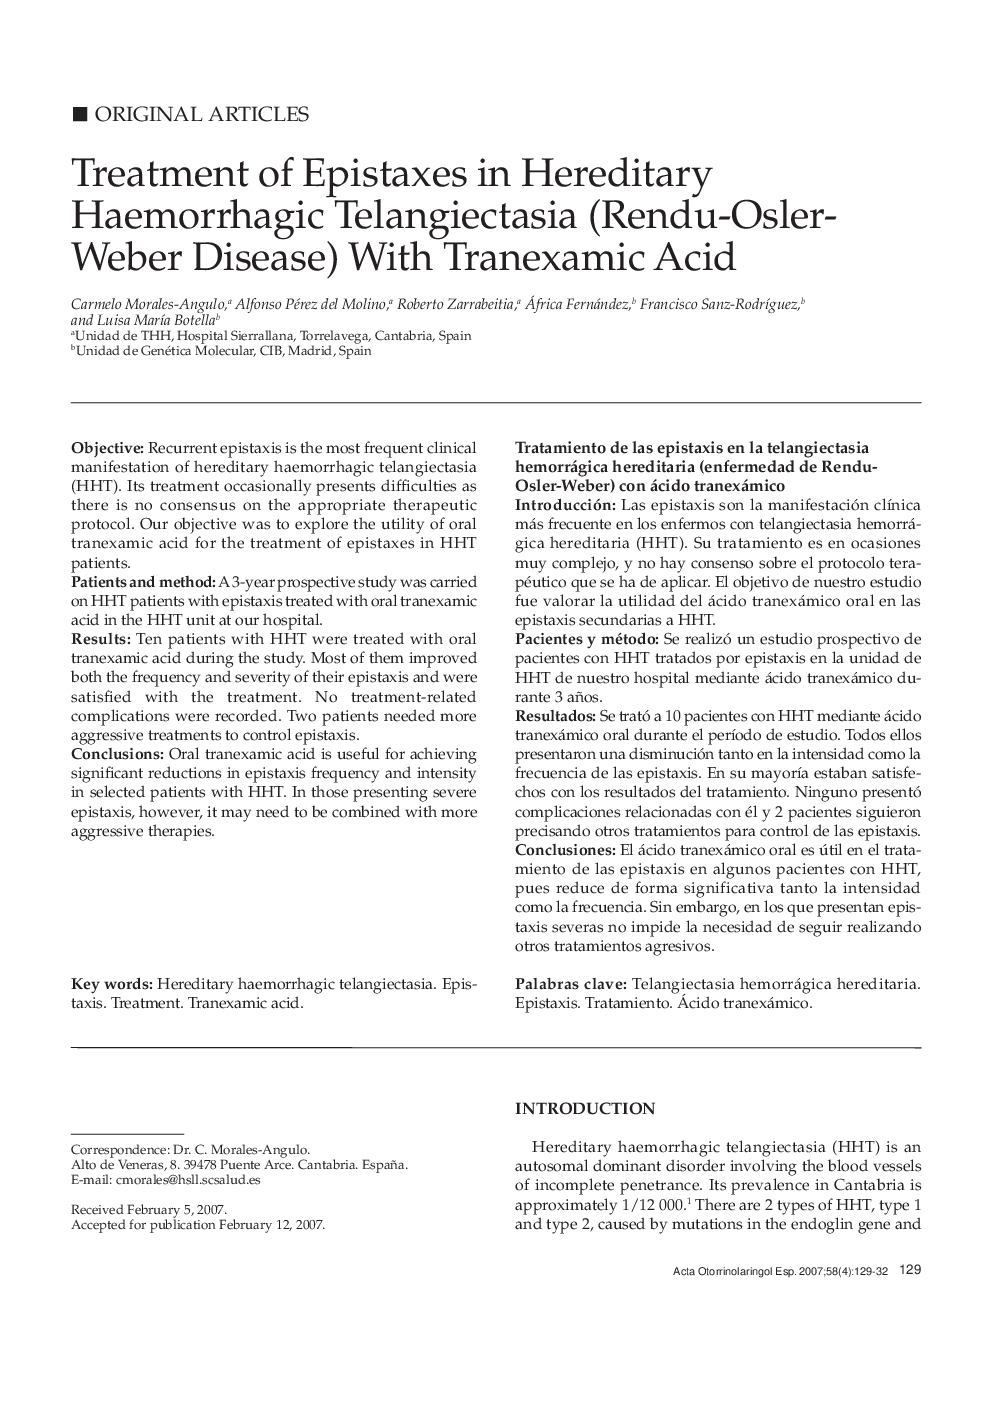 Treatment of Epistaxes in Hereditary Haemorrhagic Telangiectasia (Rendu-Osler-Weber Disease) With Tranexamic Acid